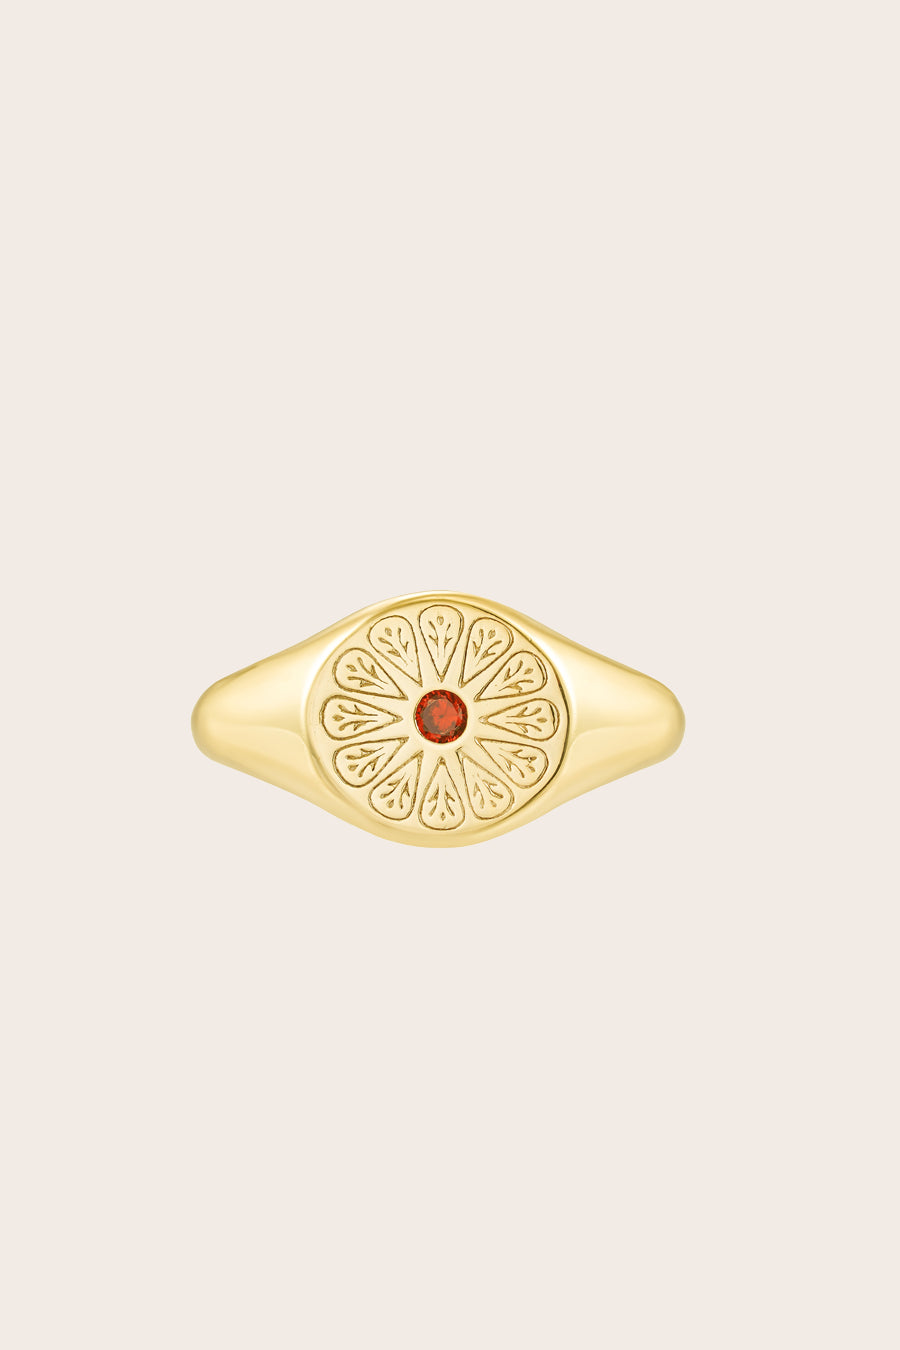 Gold January Garnet Birthstone Ring on cream